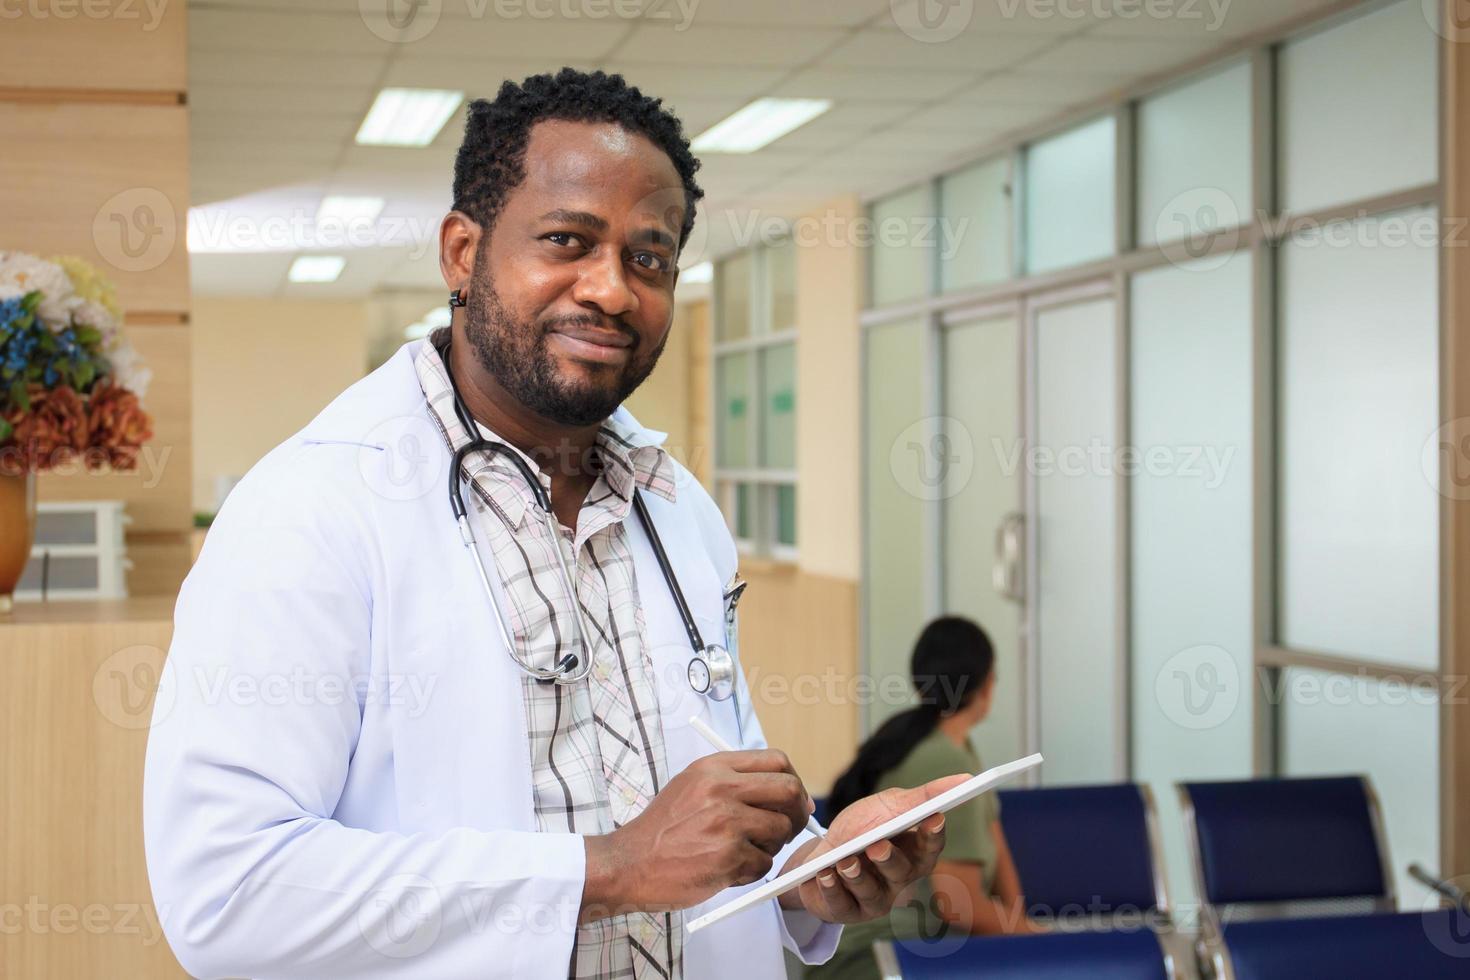 American - Black ethnicity doctor portrait in hospital portrait. photo